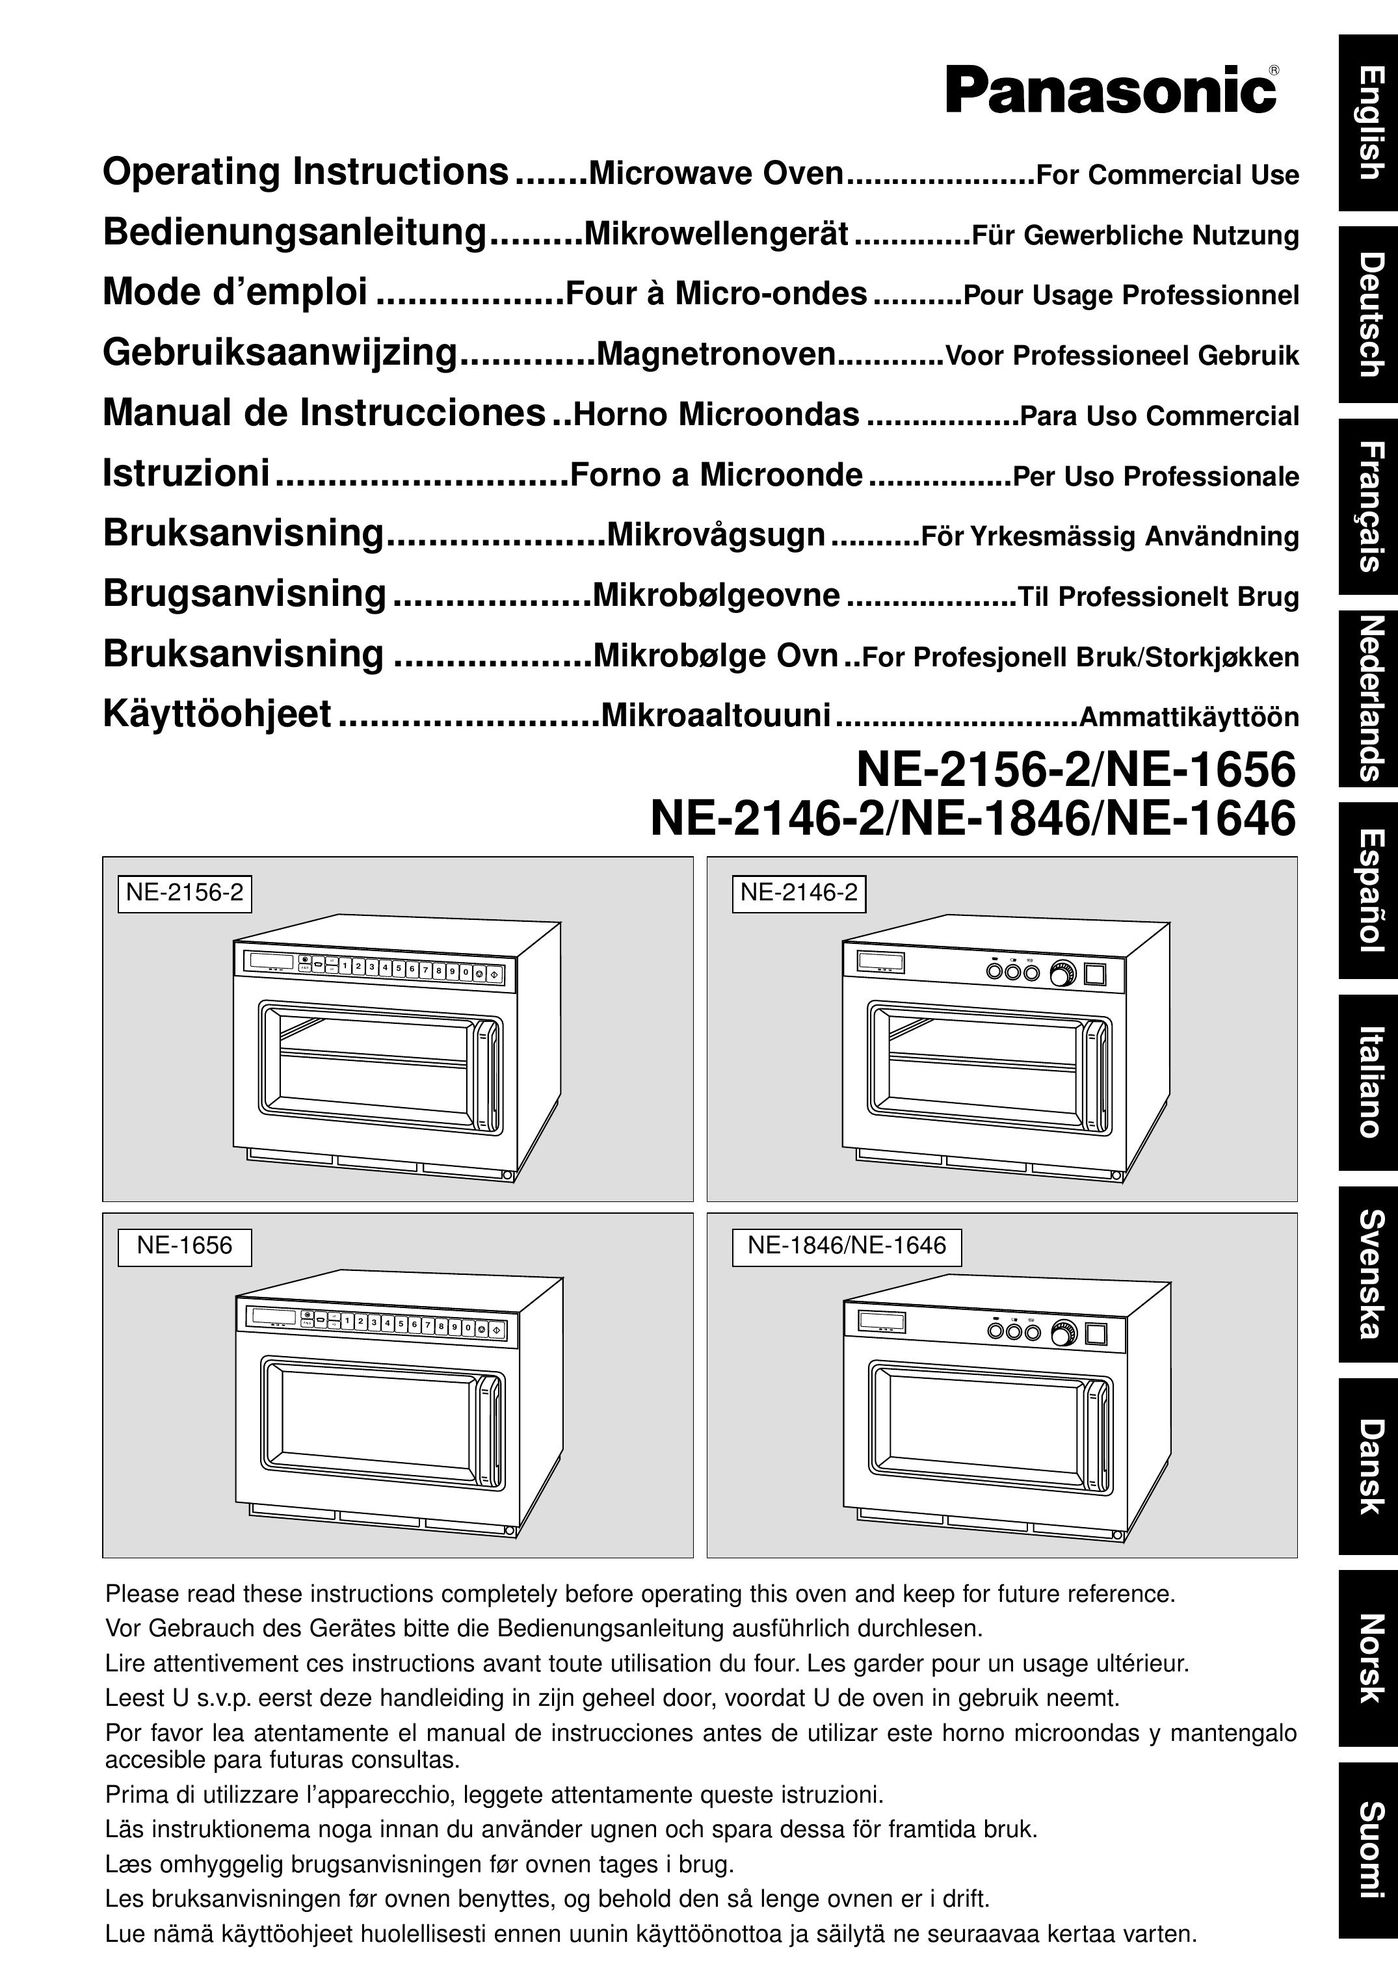 Panasonic NE-1646 Microwave Oven User Manual